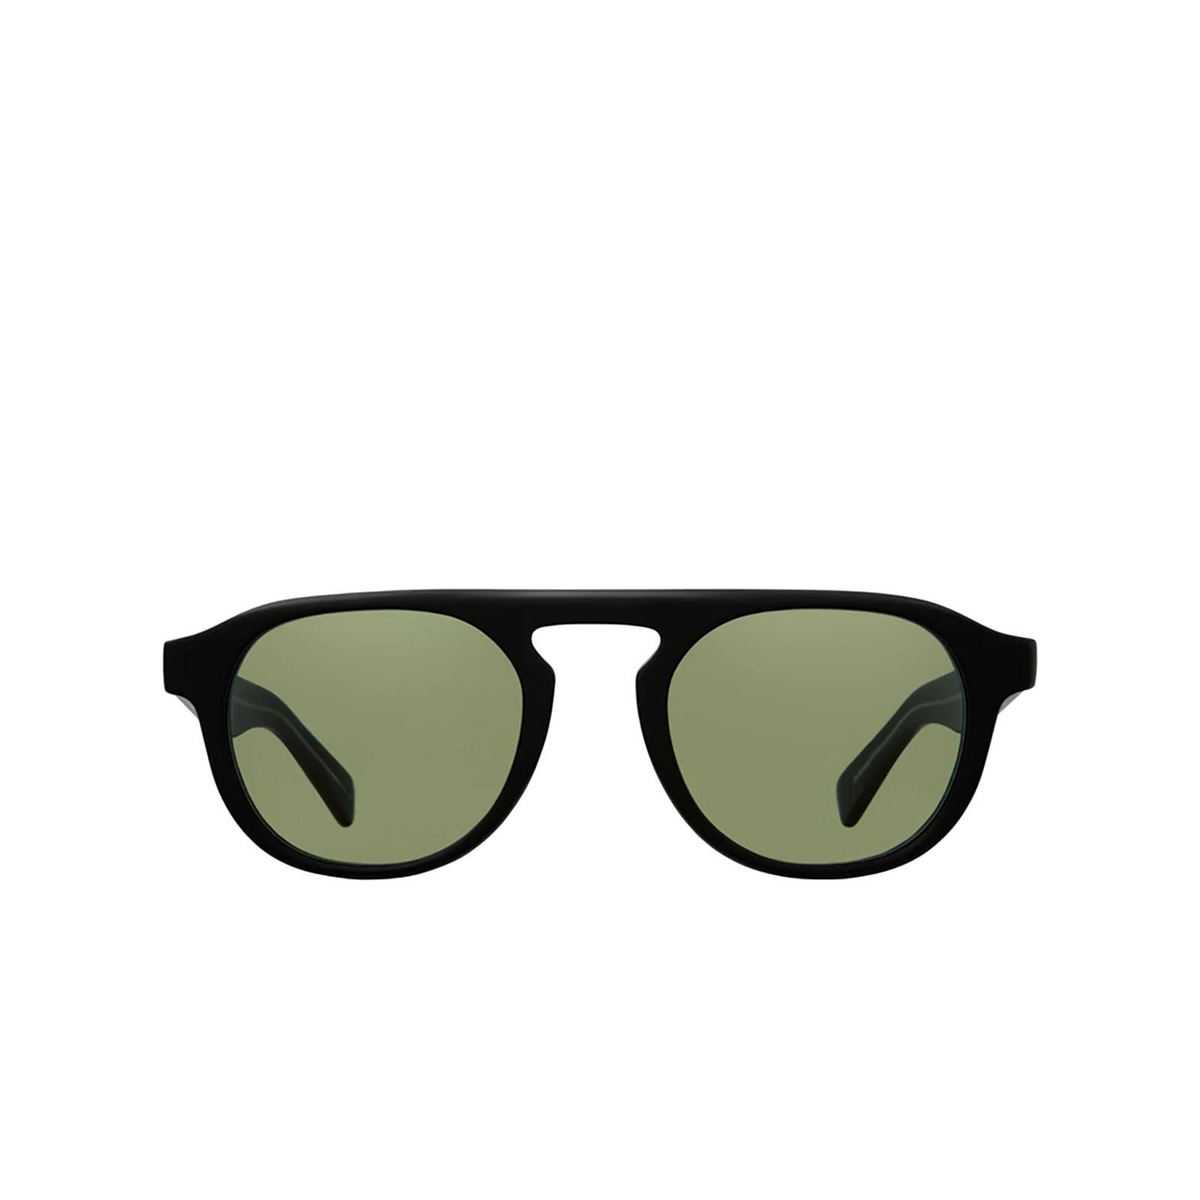 Garrett Leight® Aviator Sunglasses: Harding X Sun color Matte Black Mbk-vvg - front view.